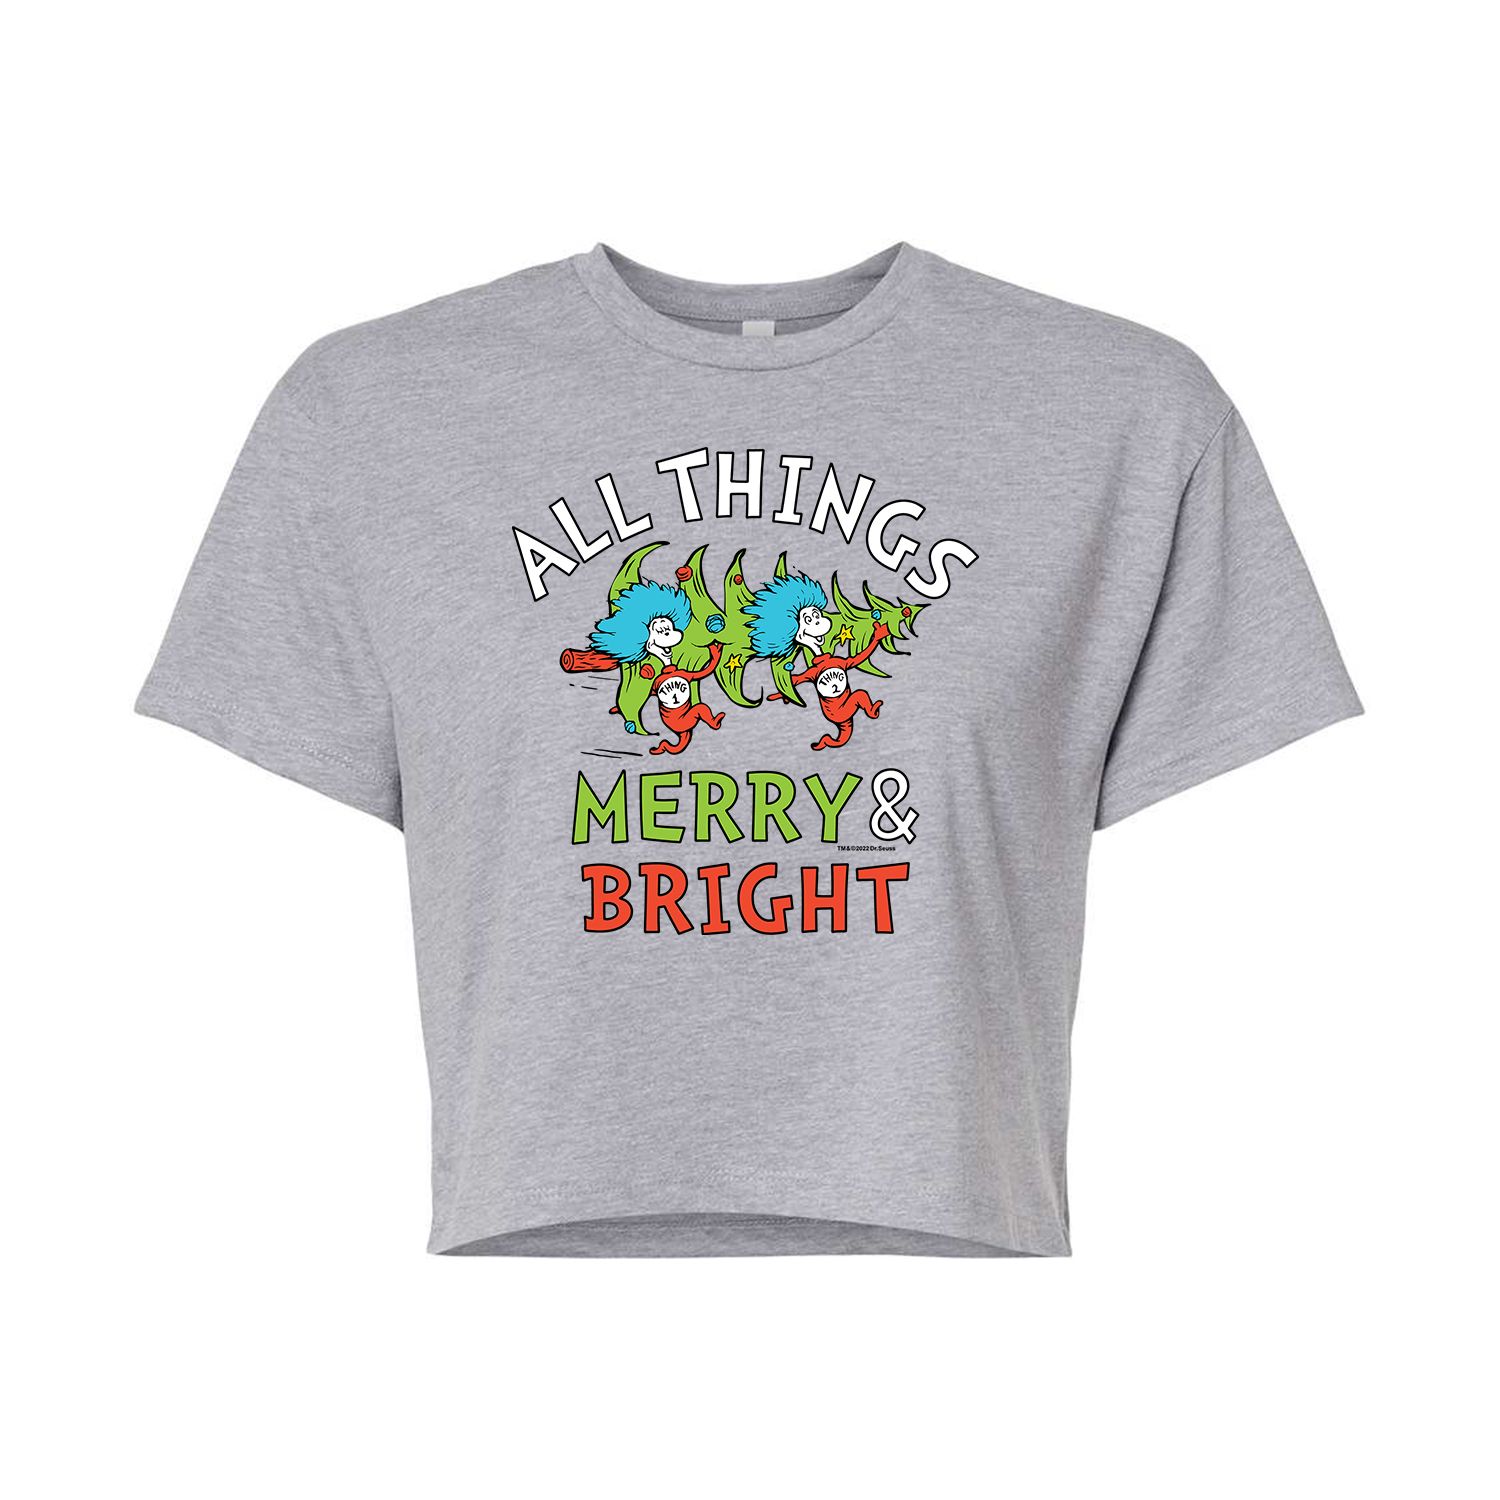 Укороченная футболка с рисунком Dr. Seuss Merry & Bright для юниоров Licensed Character